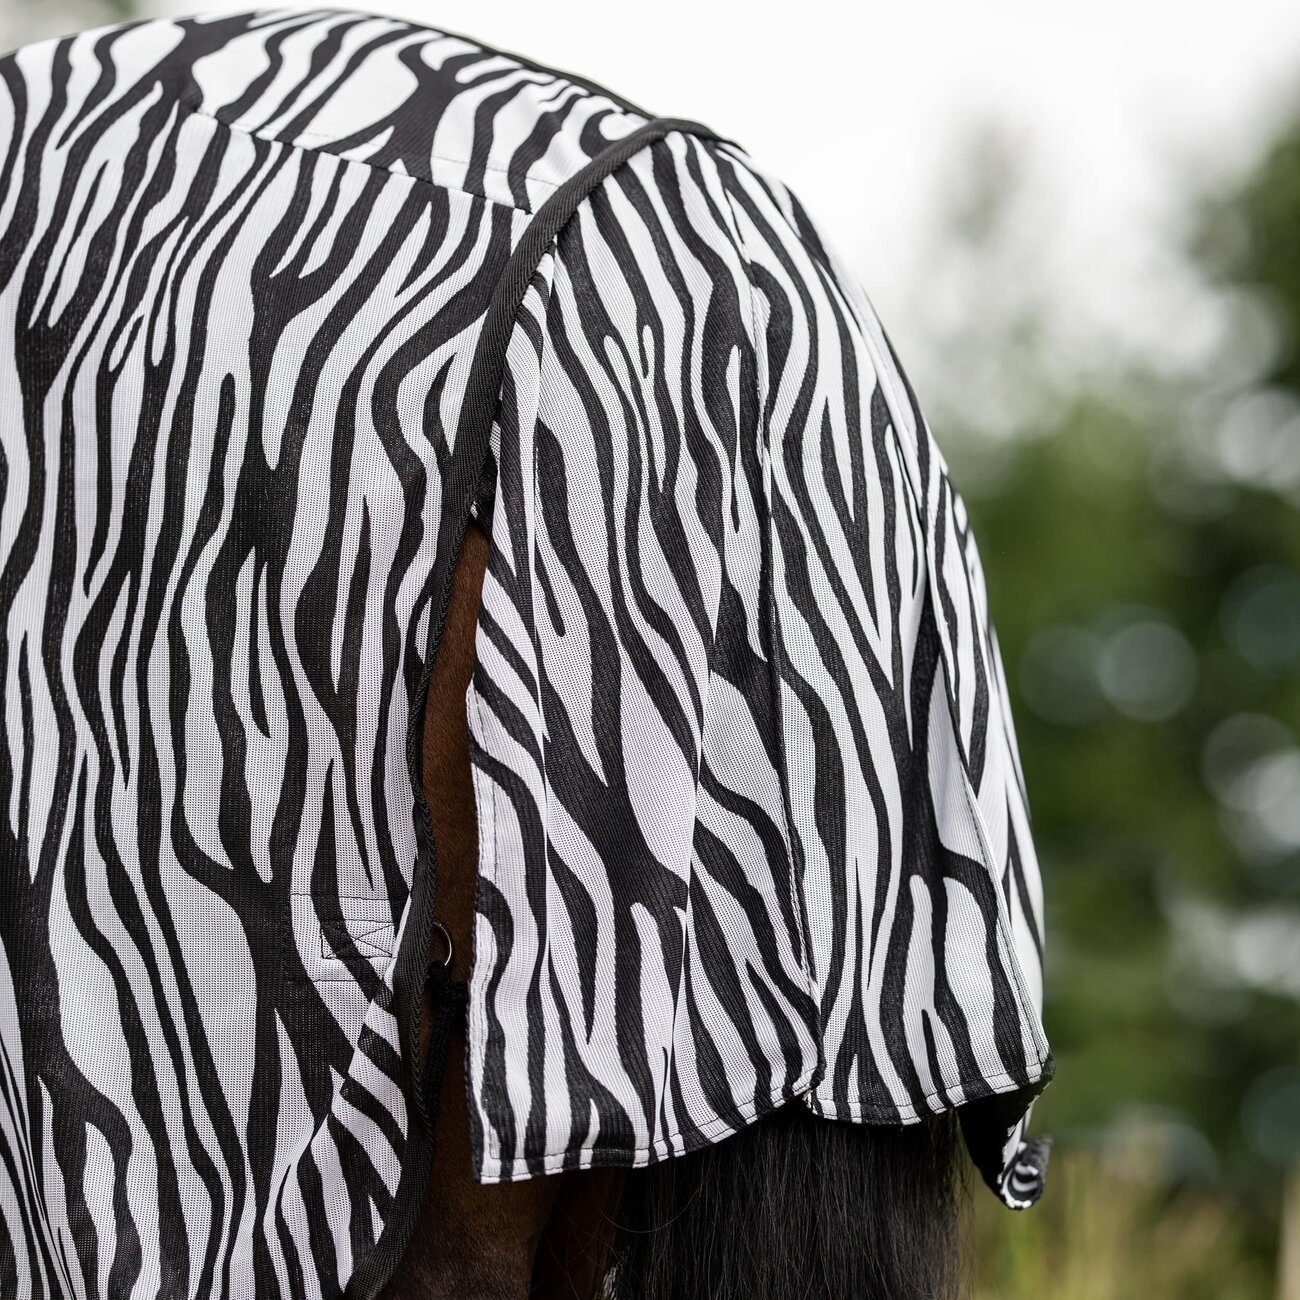 Flexi OutdoorFliegendecke BUSSE Pferdedecke Comfort Zebra Tierdecke